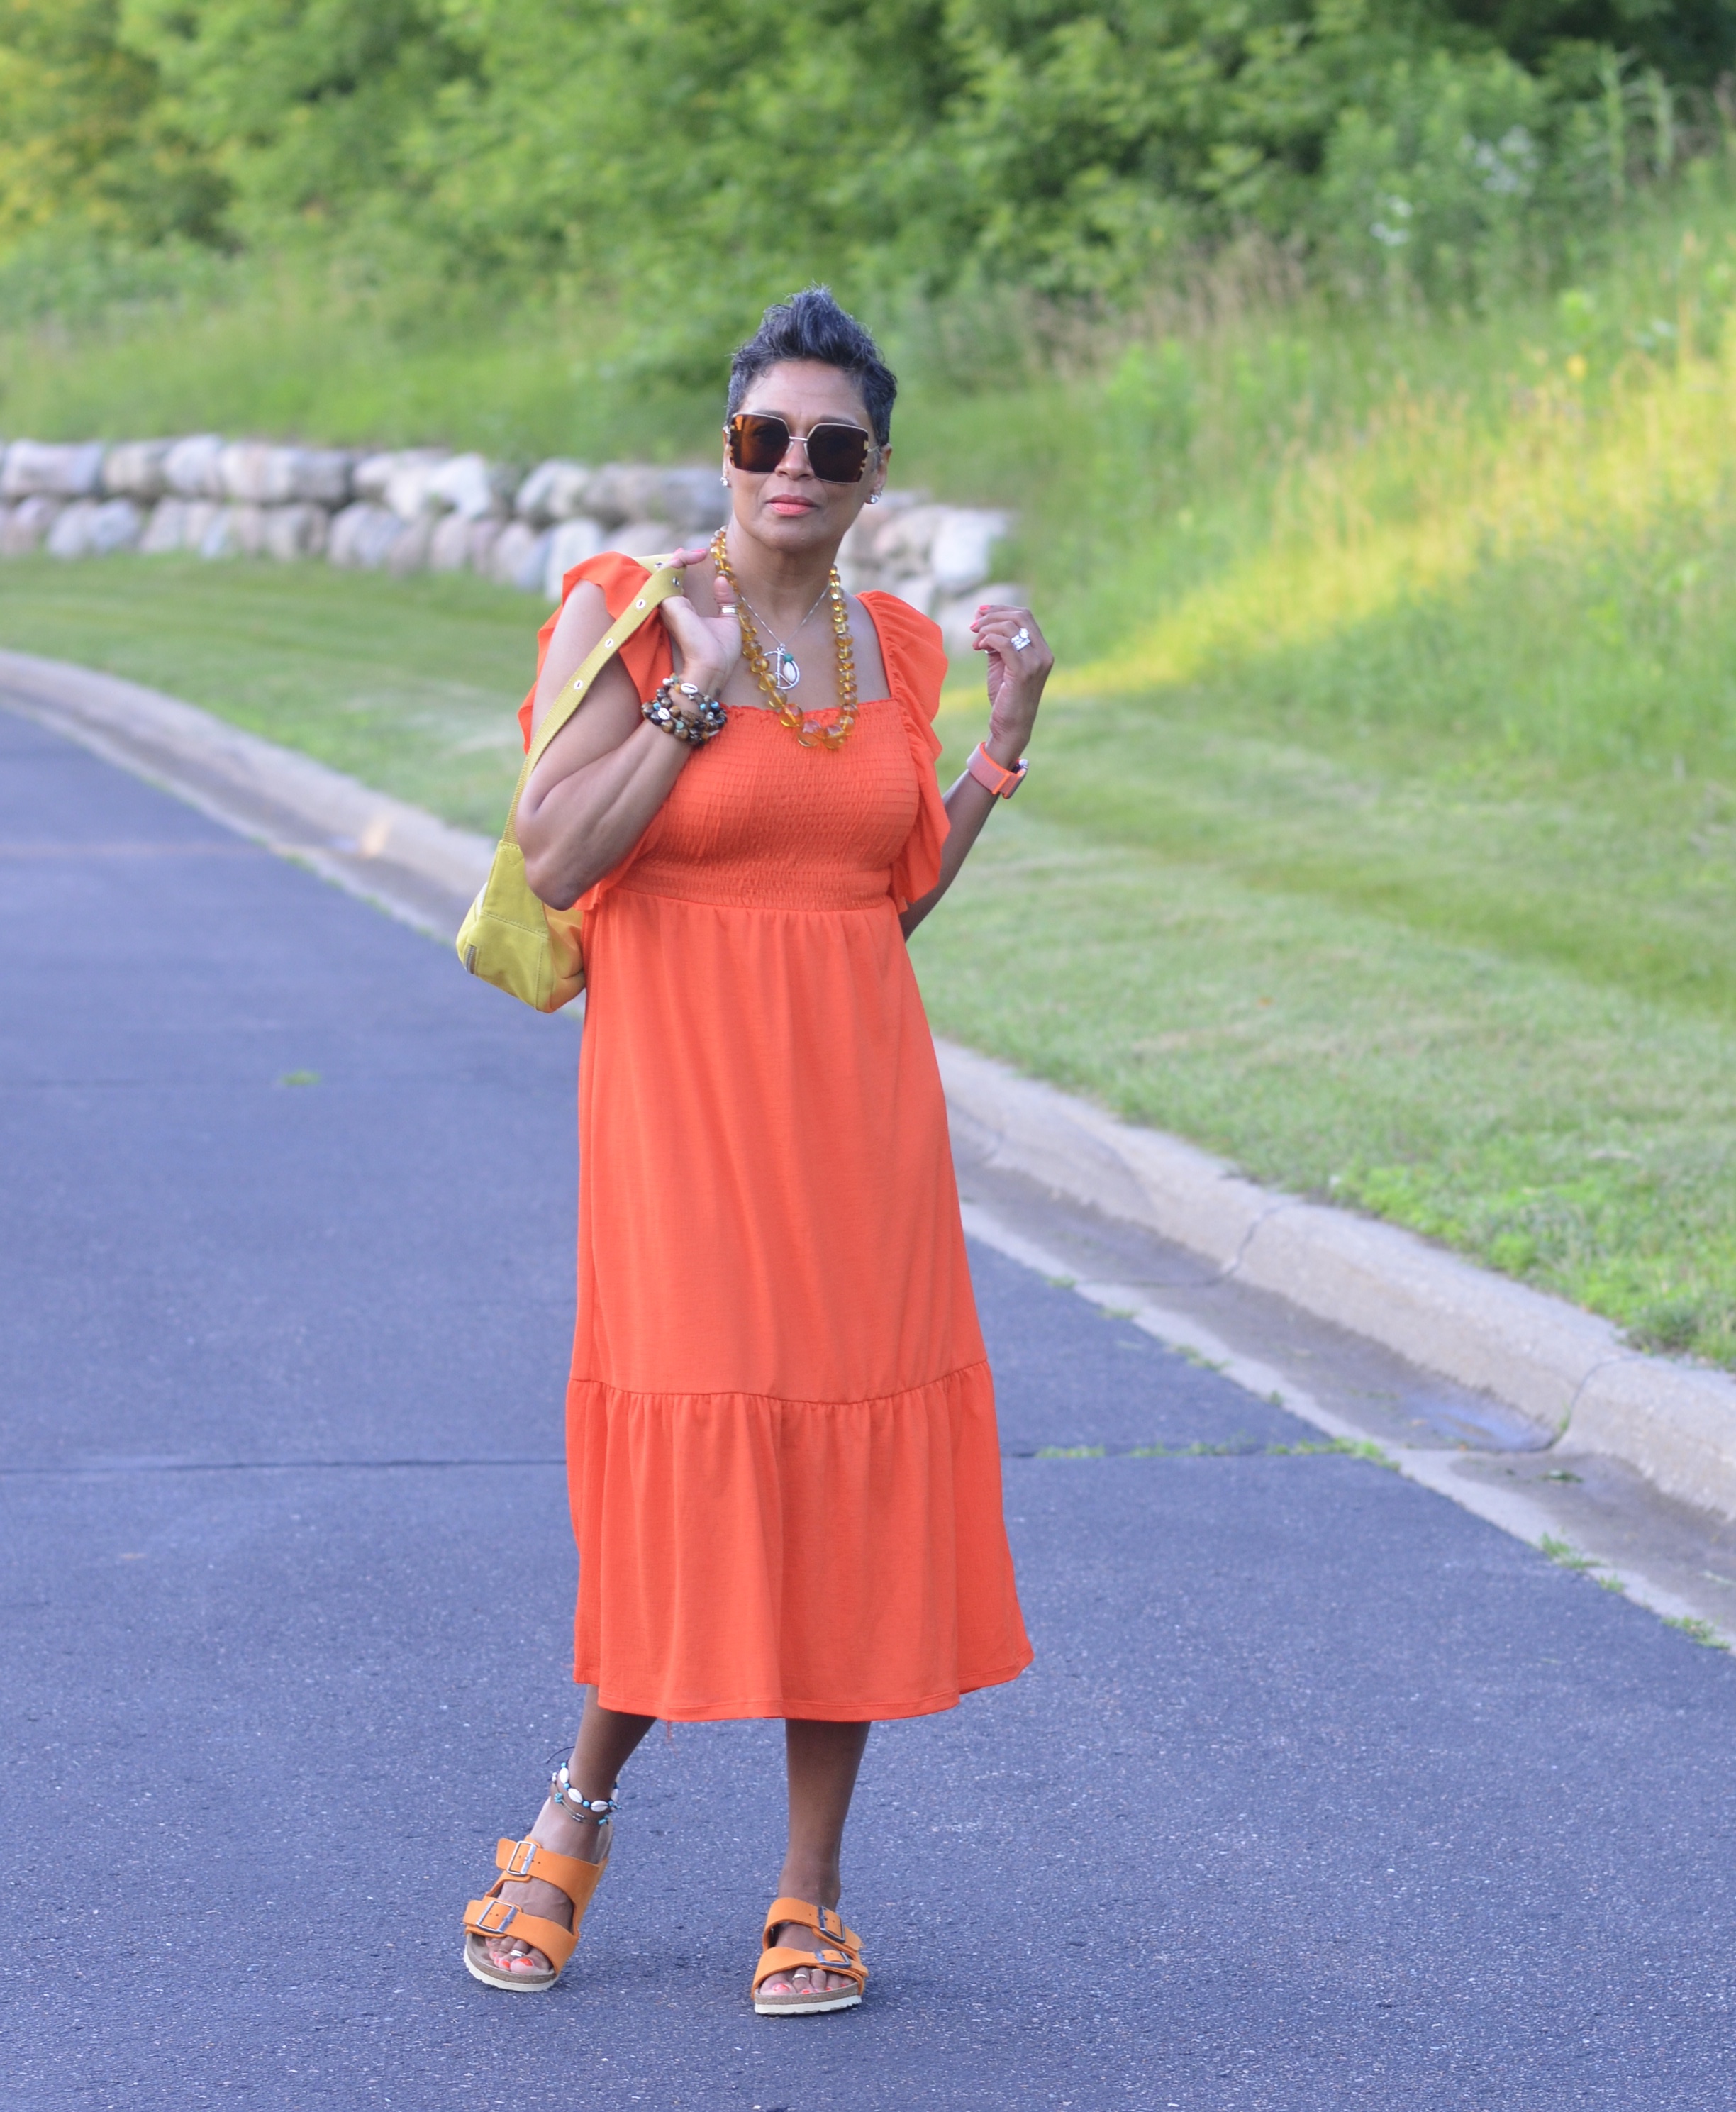 zara orange dress 2019